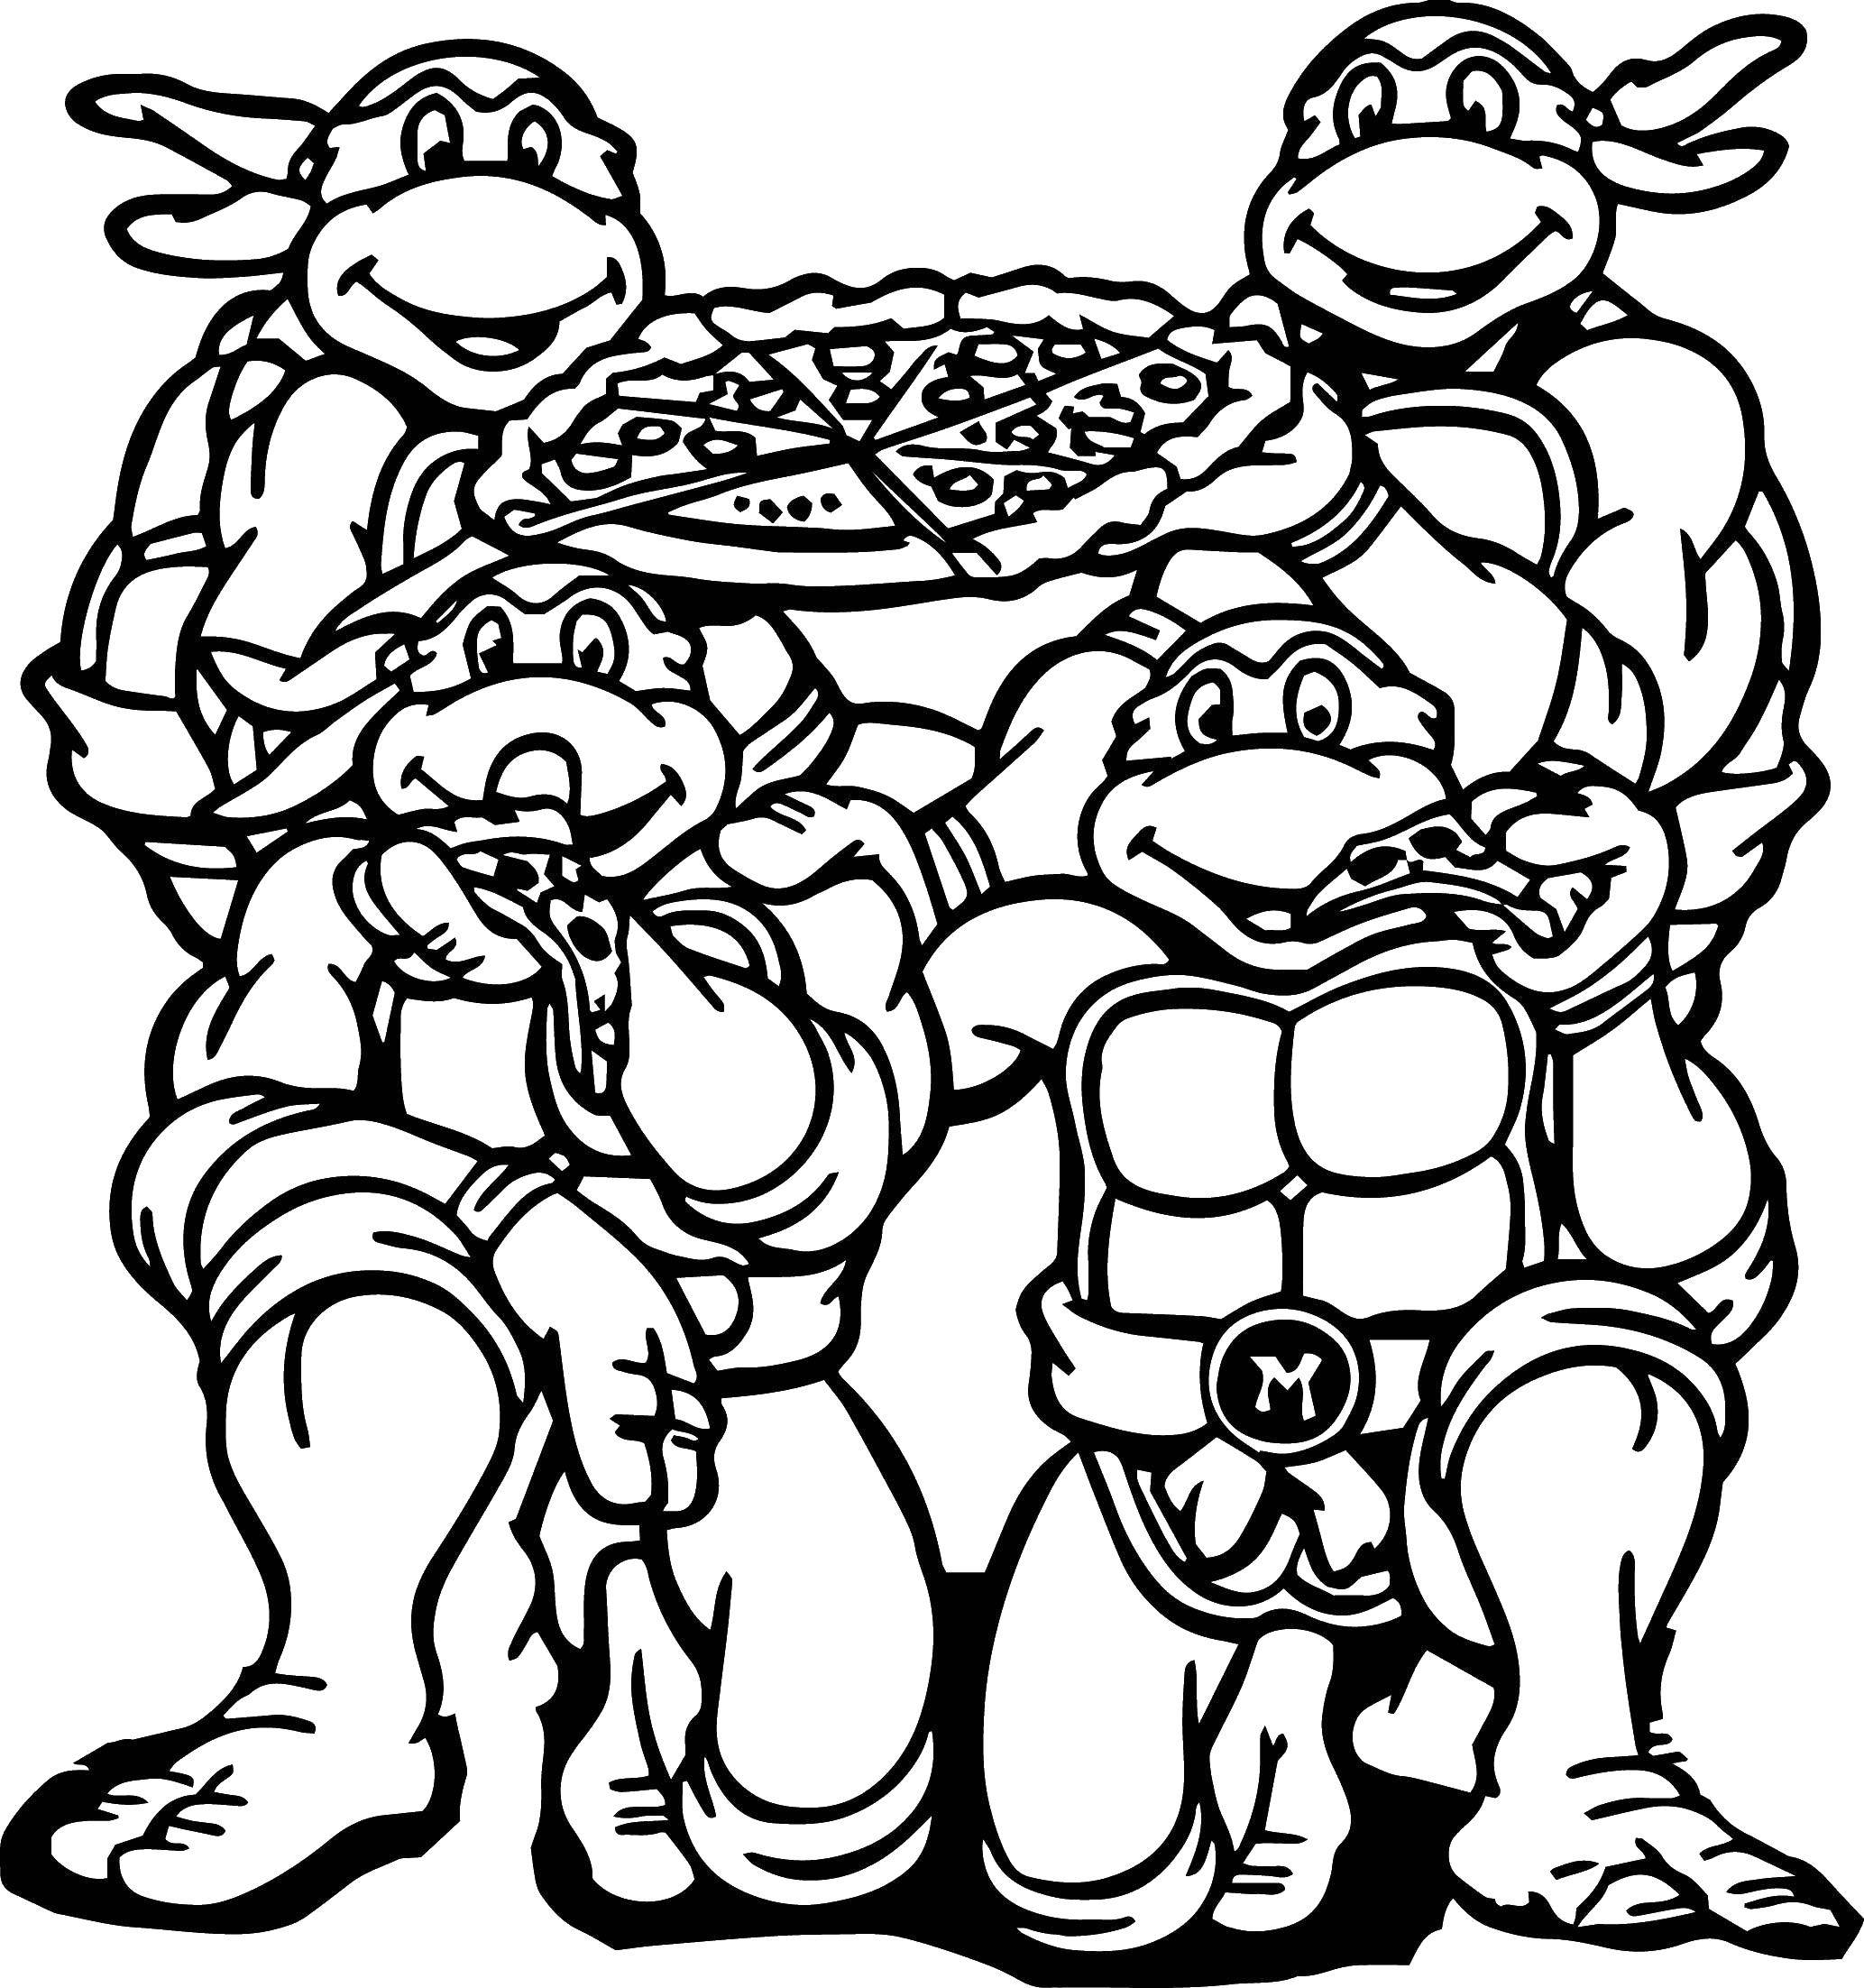 Coloring Teenage mutant ninja turtles eating pizza. Category ninja . Tags:  teenage mutant ninja turtles pizza, turtles.